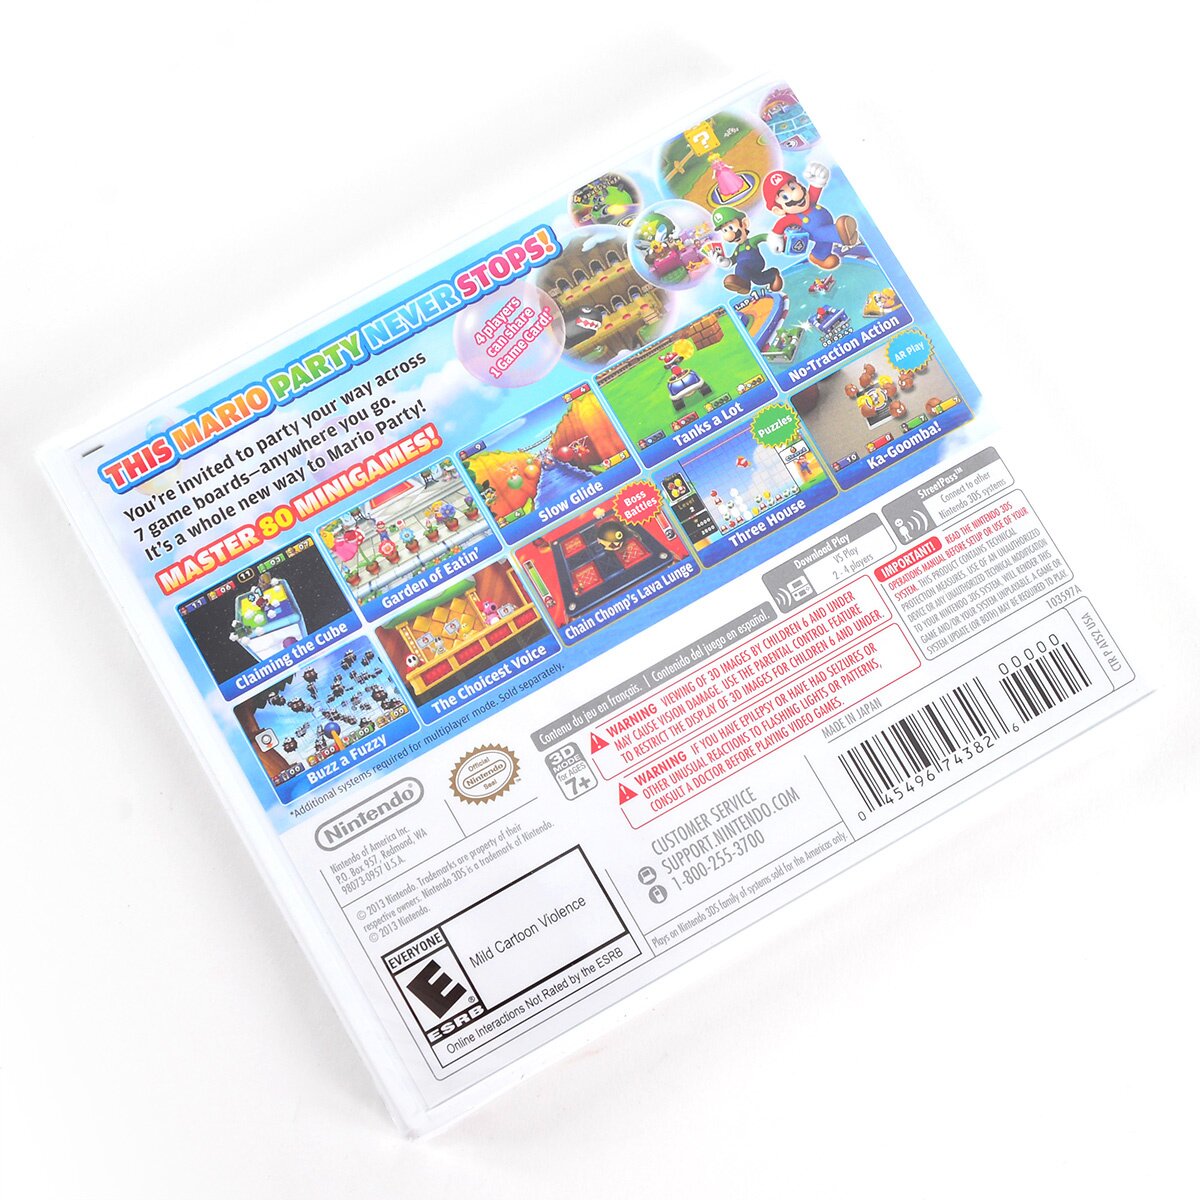 Eastern Skærpe regering Mario Party Island Tour (3DS) - Tokyo Otaku Mode (TOM)